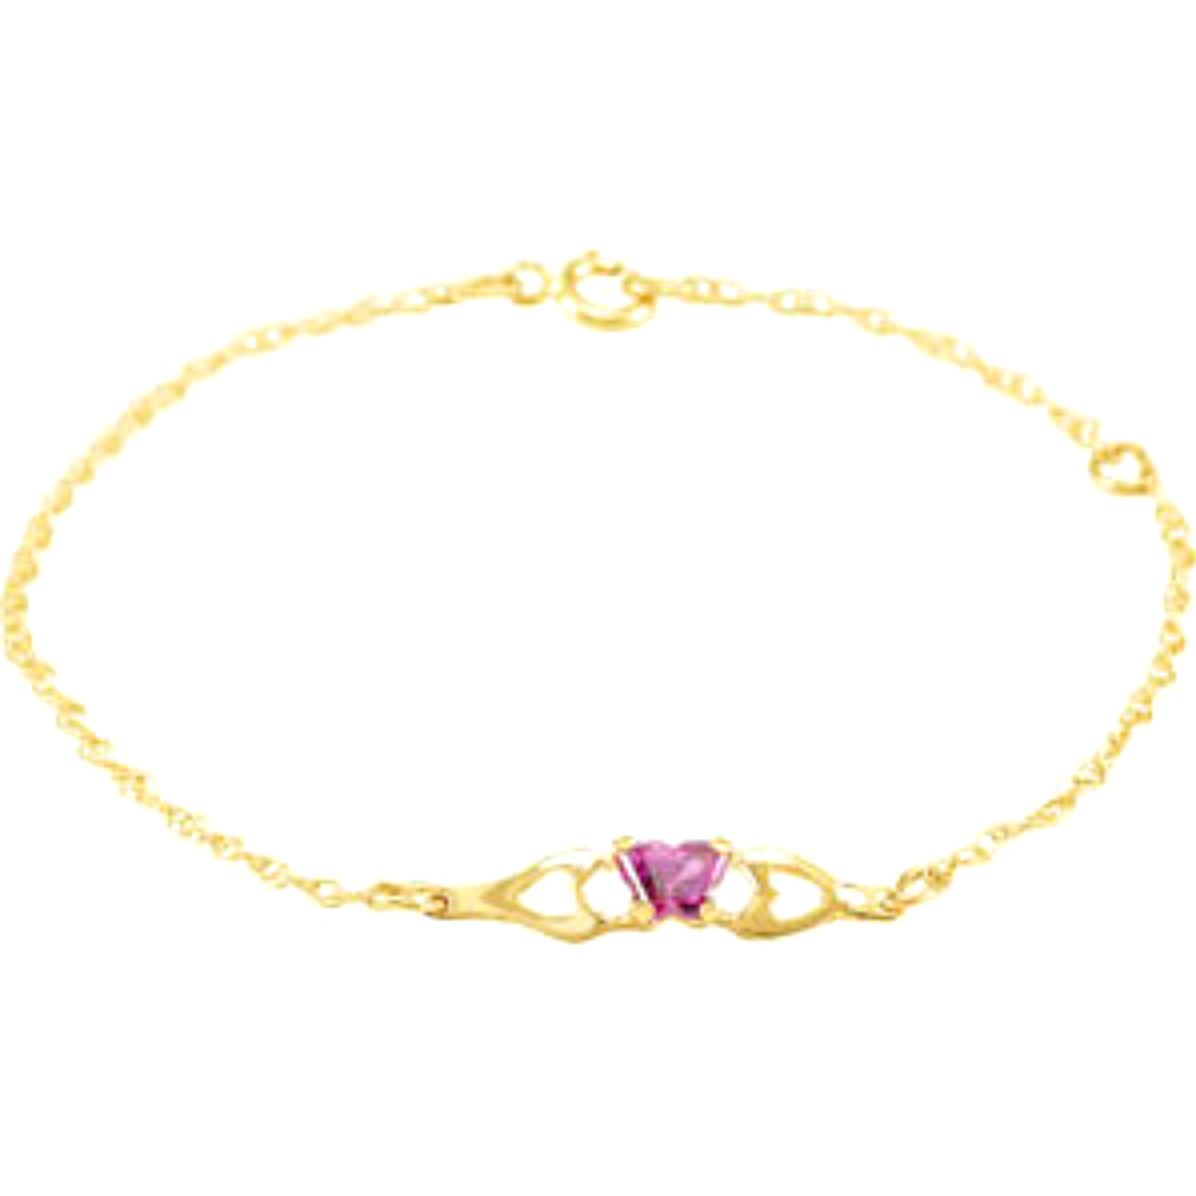 Girl's 'Bfly' July Birthstone Bracelet in 10k Yellow Gold, 4.1"